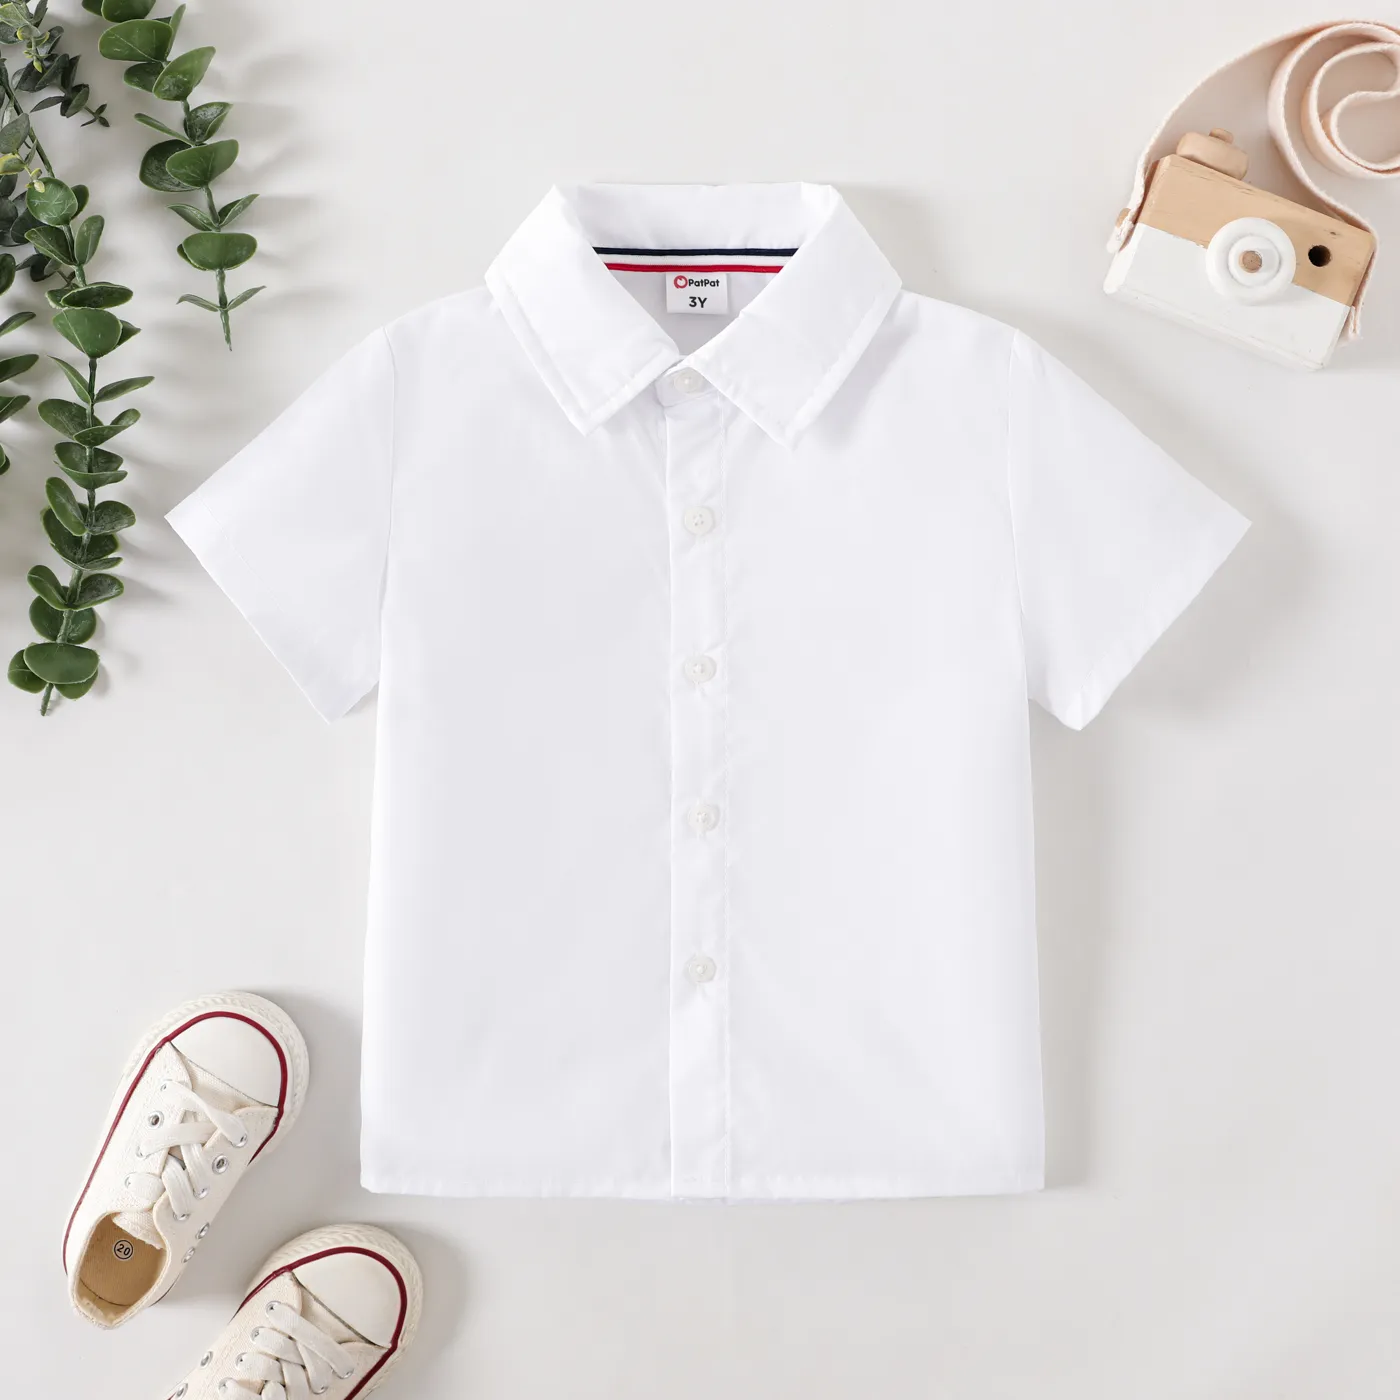 Toddler Girl/Boy School Uniform Solid Short-sleeve Shirt